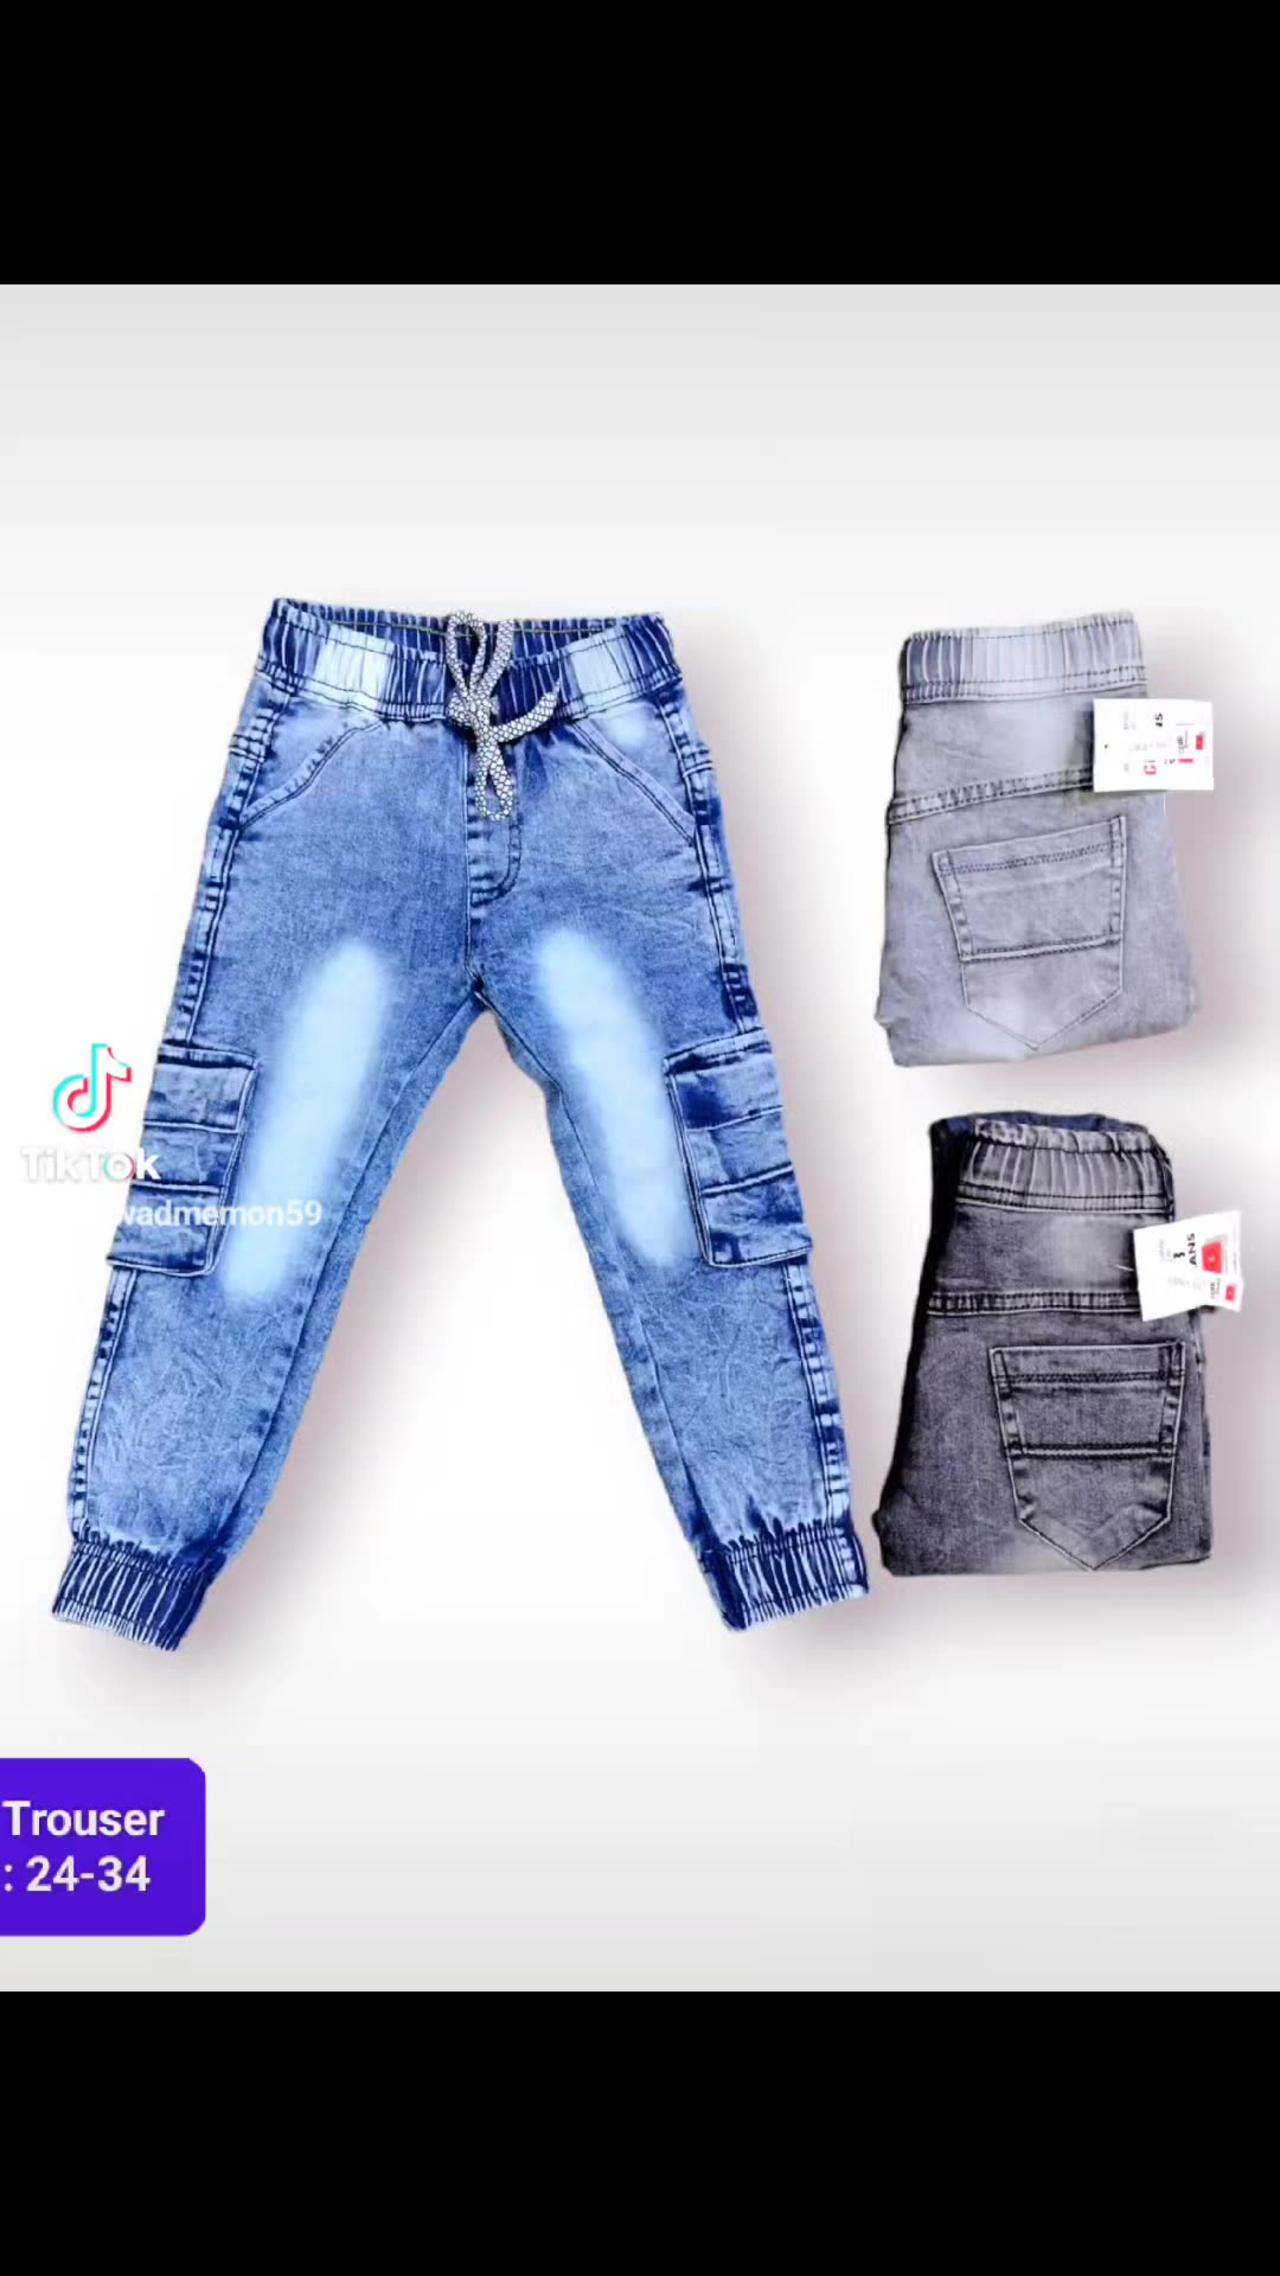 Jeans pants denim stylish fashion